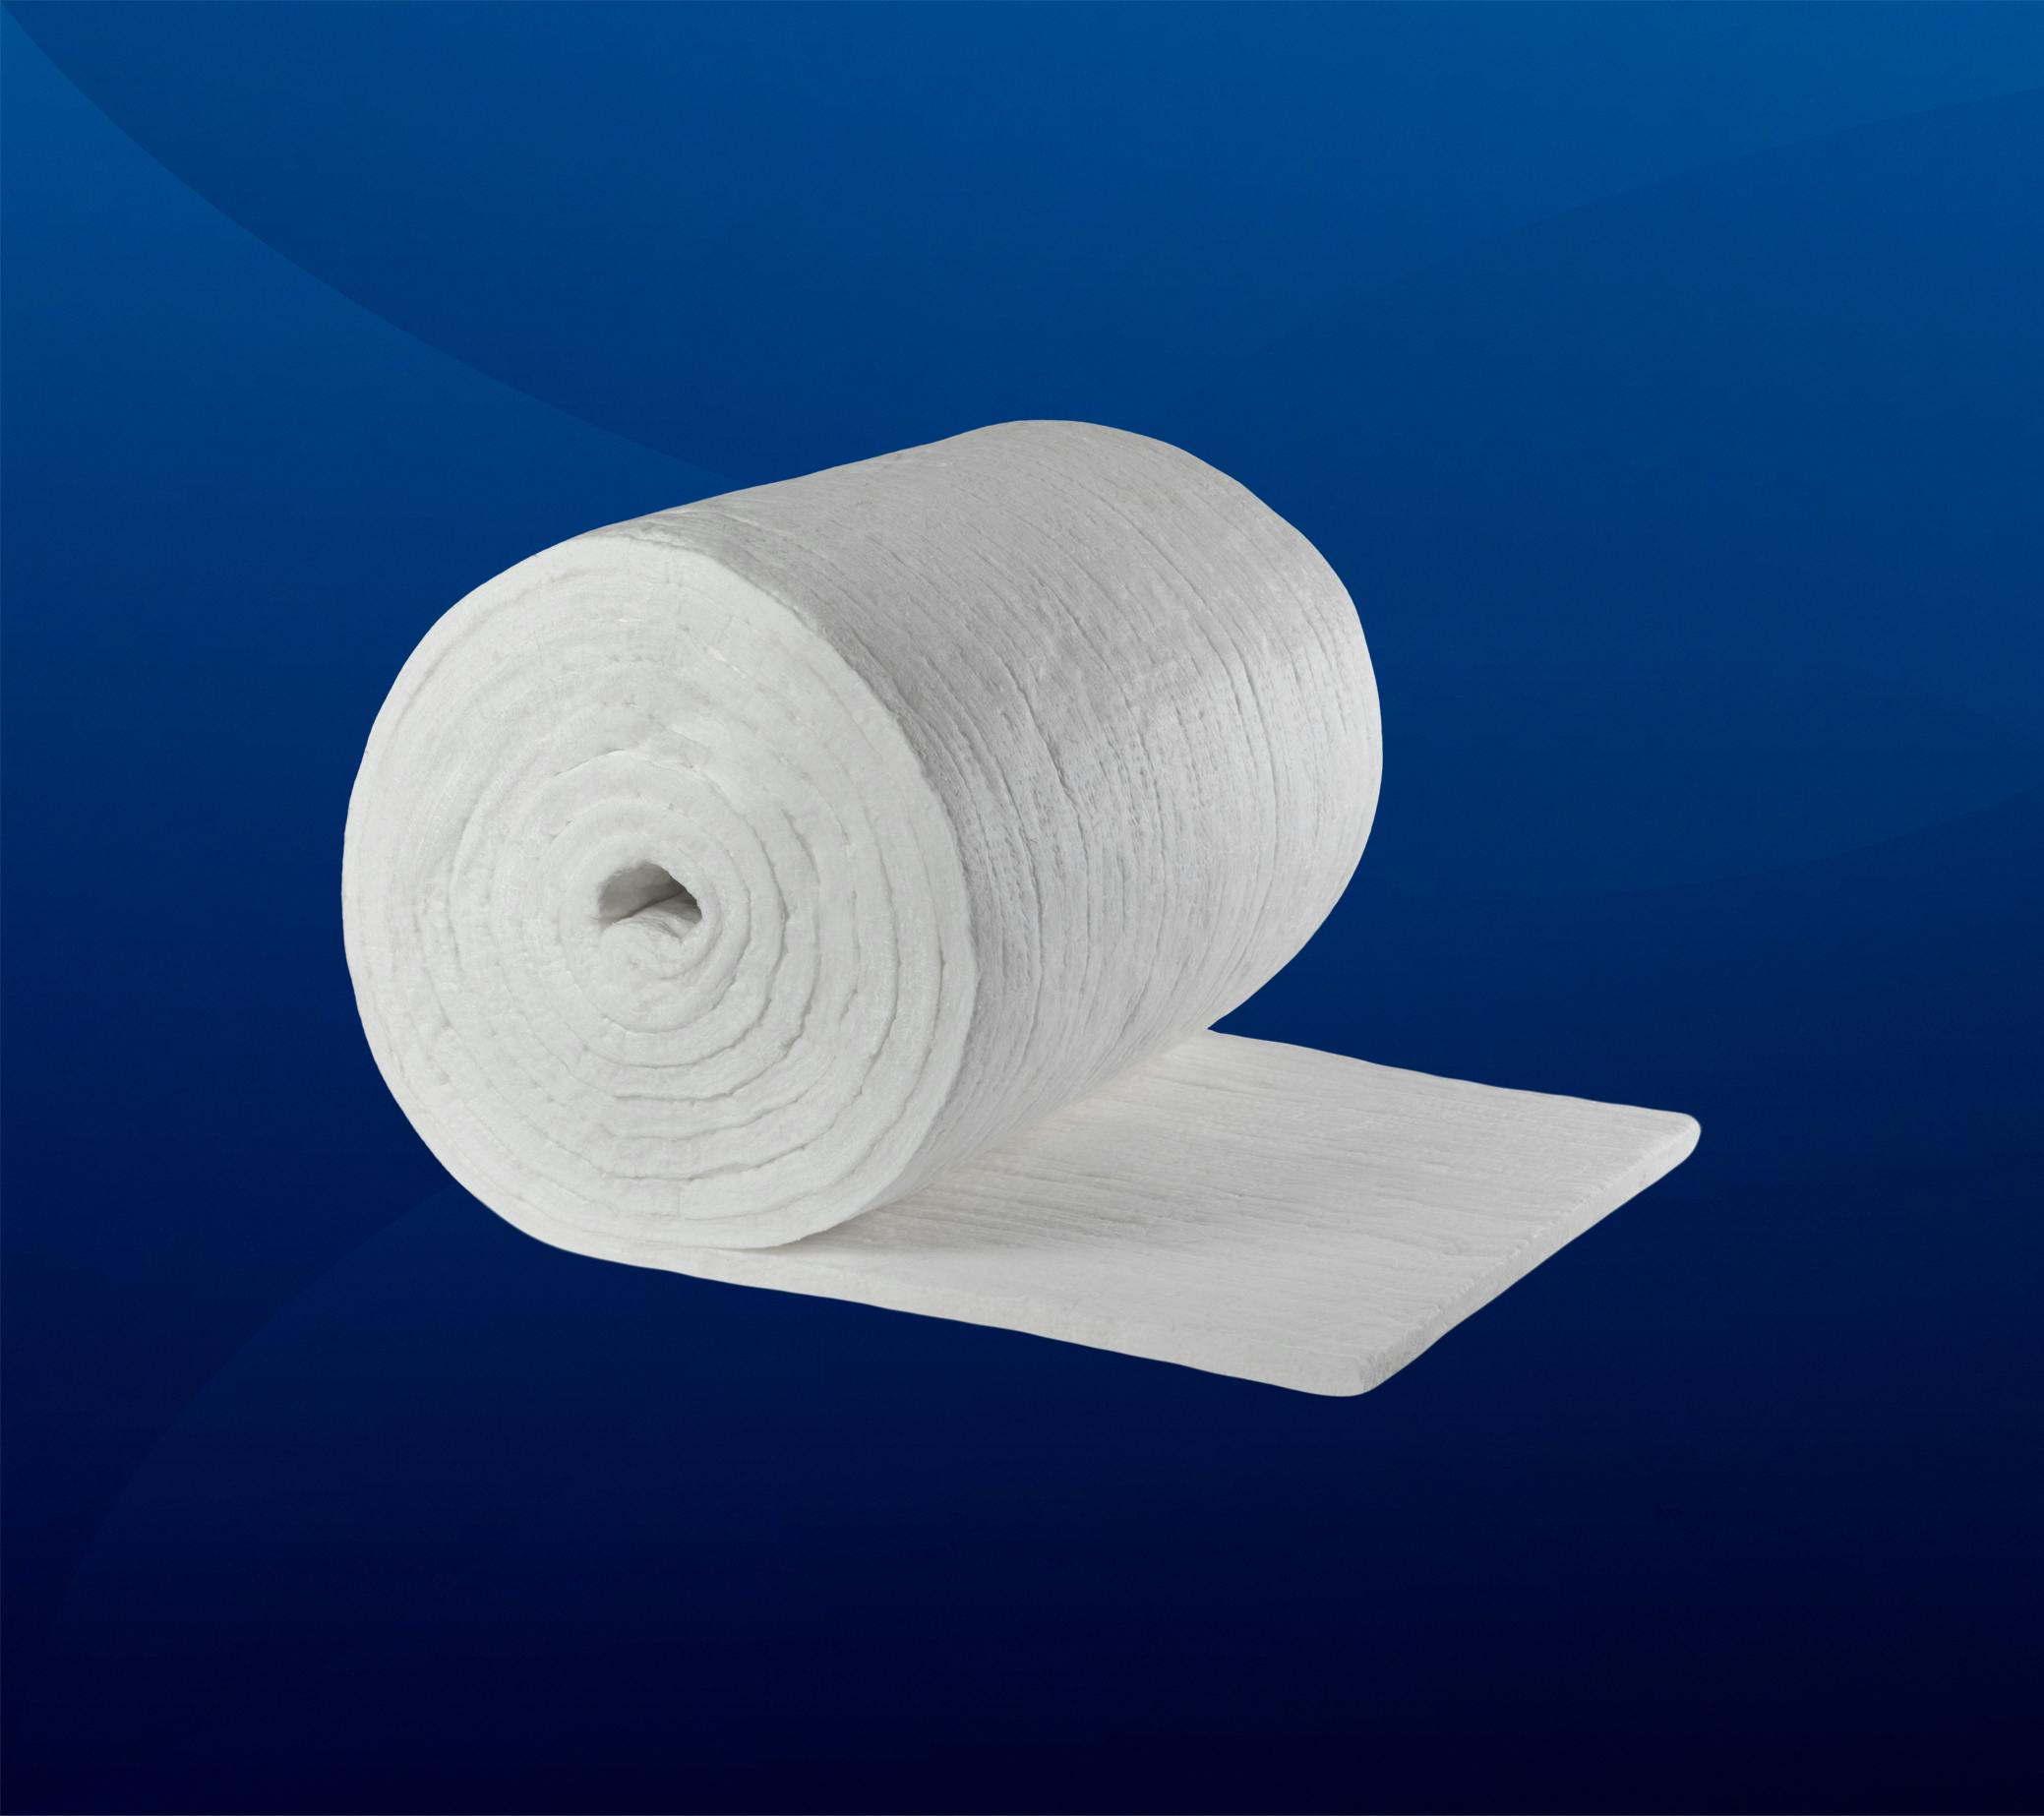 Factory Price 1260 Degree Refractory Ceramic Fibre Blanket 50mm